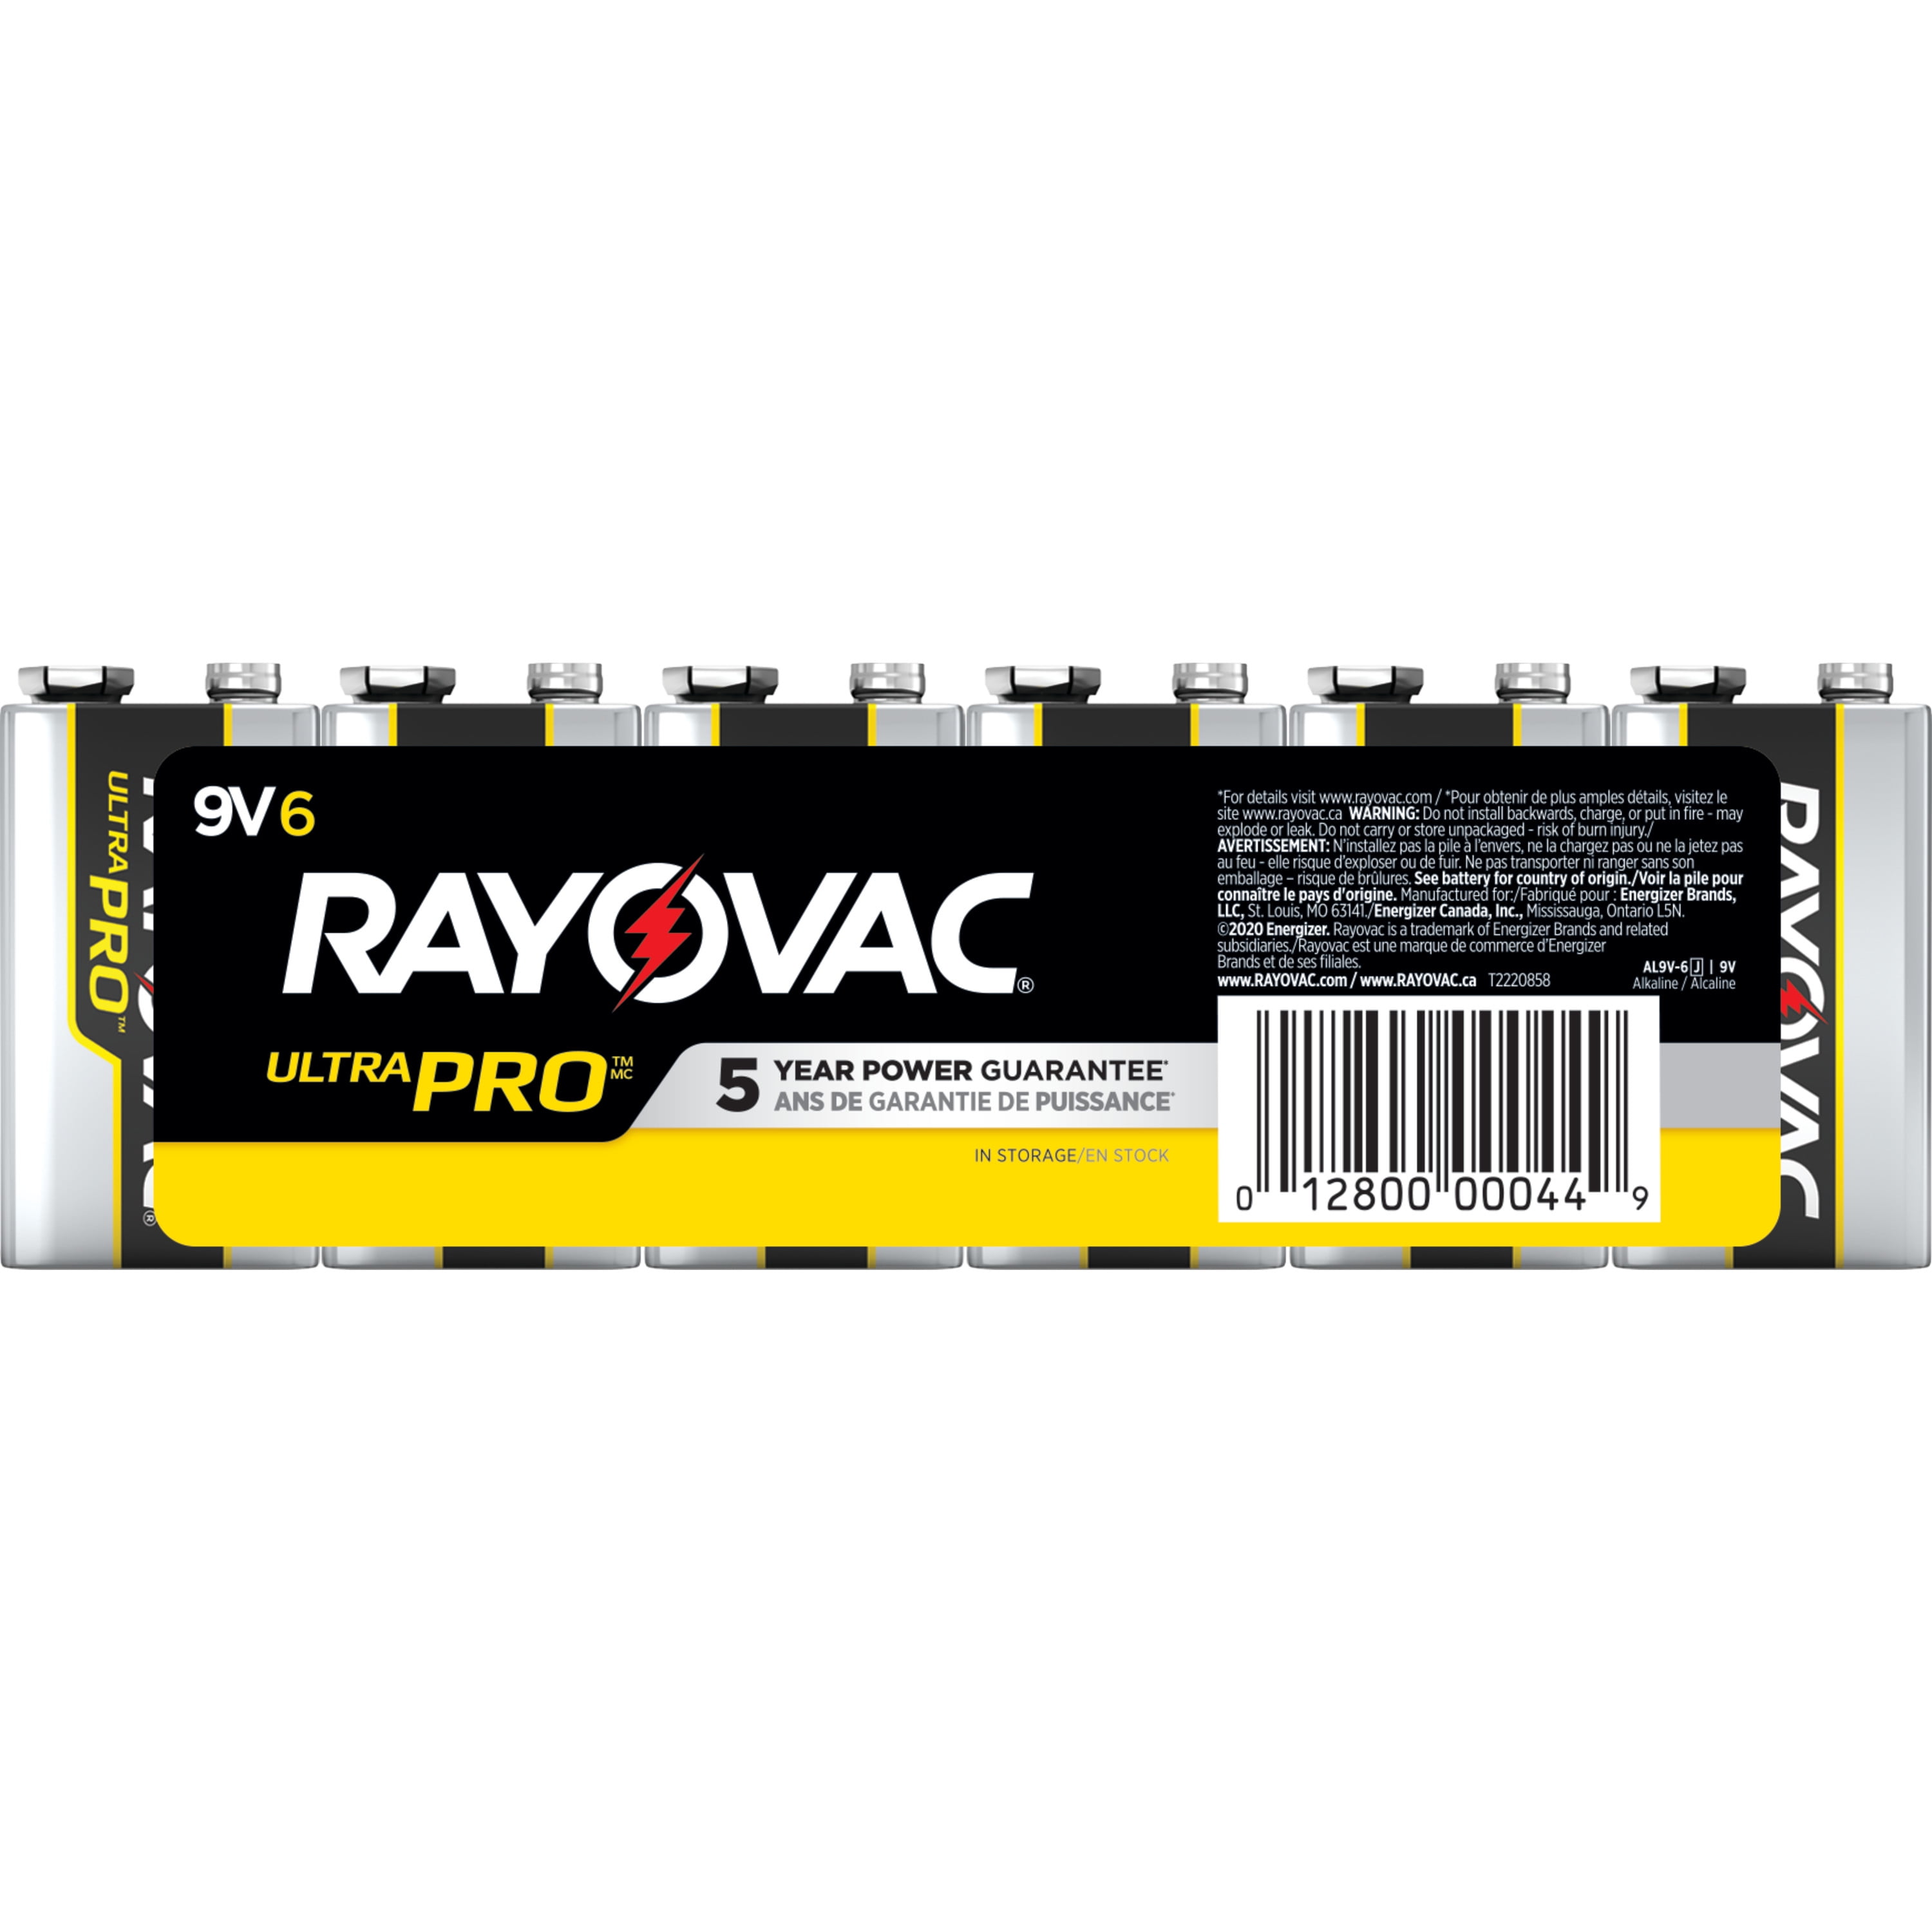 Ultra Pro Alkaline 9V Cell Batteries Rayovac 9V Batteries 6 Battery Count 